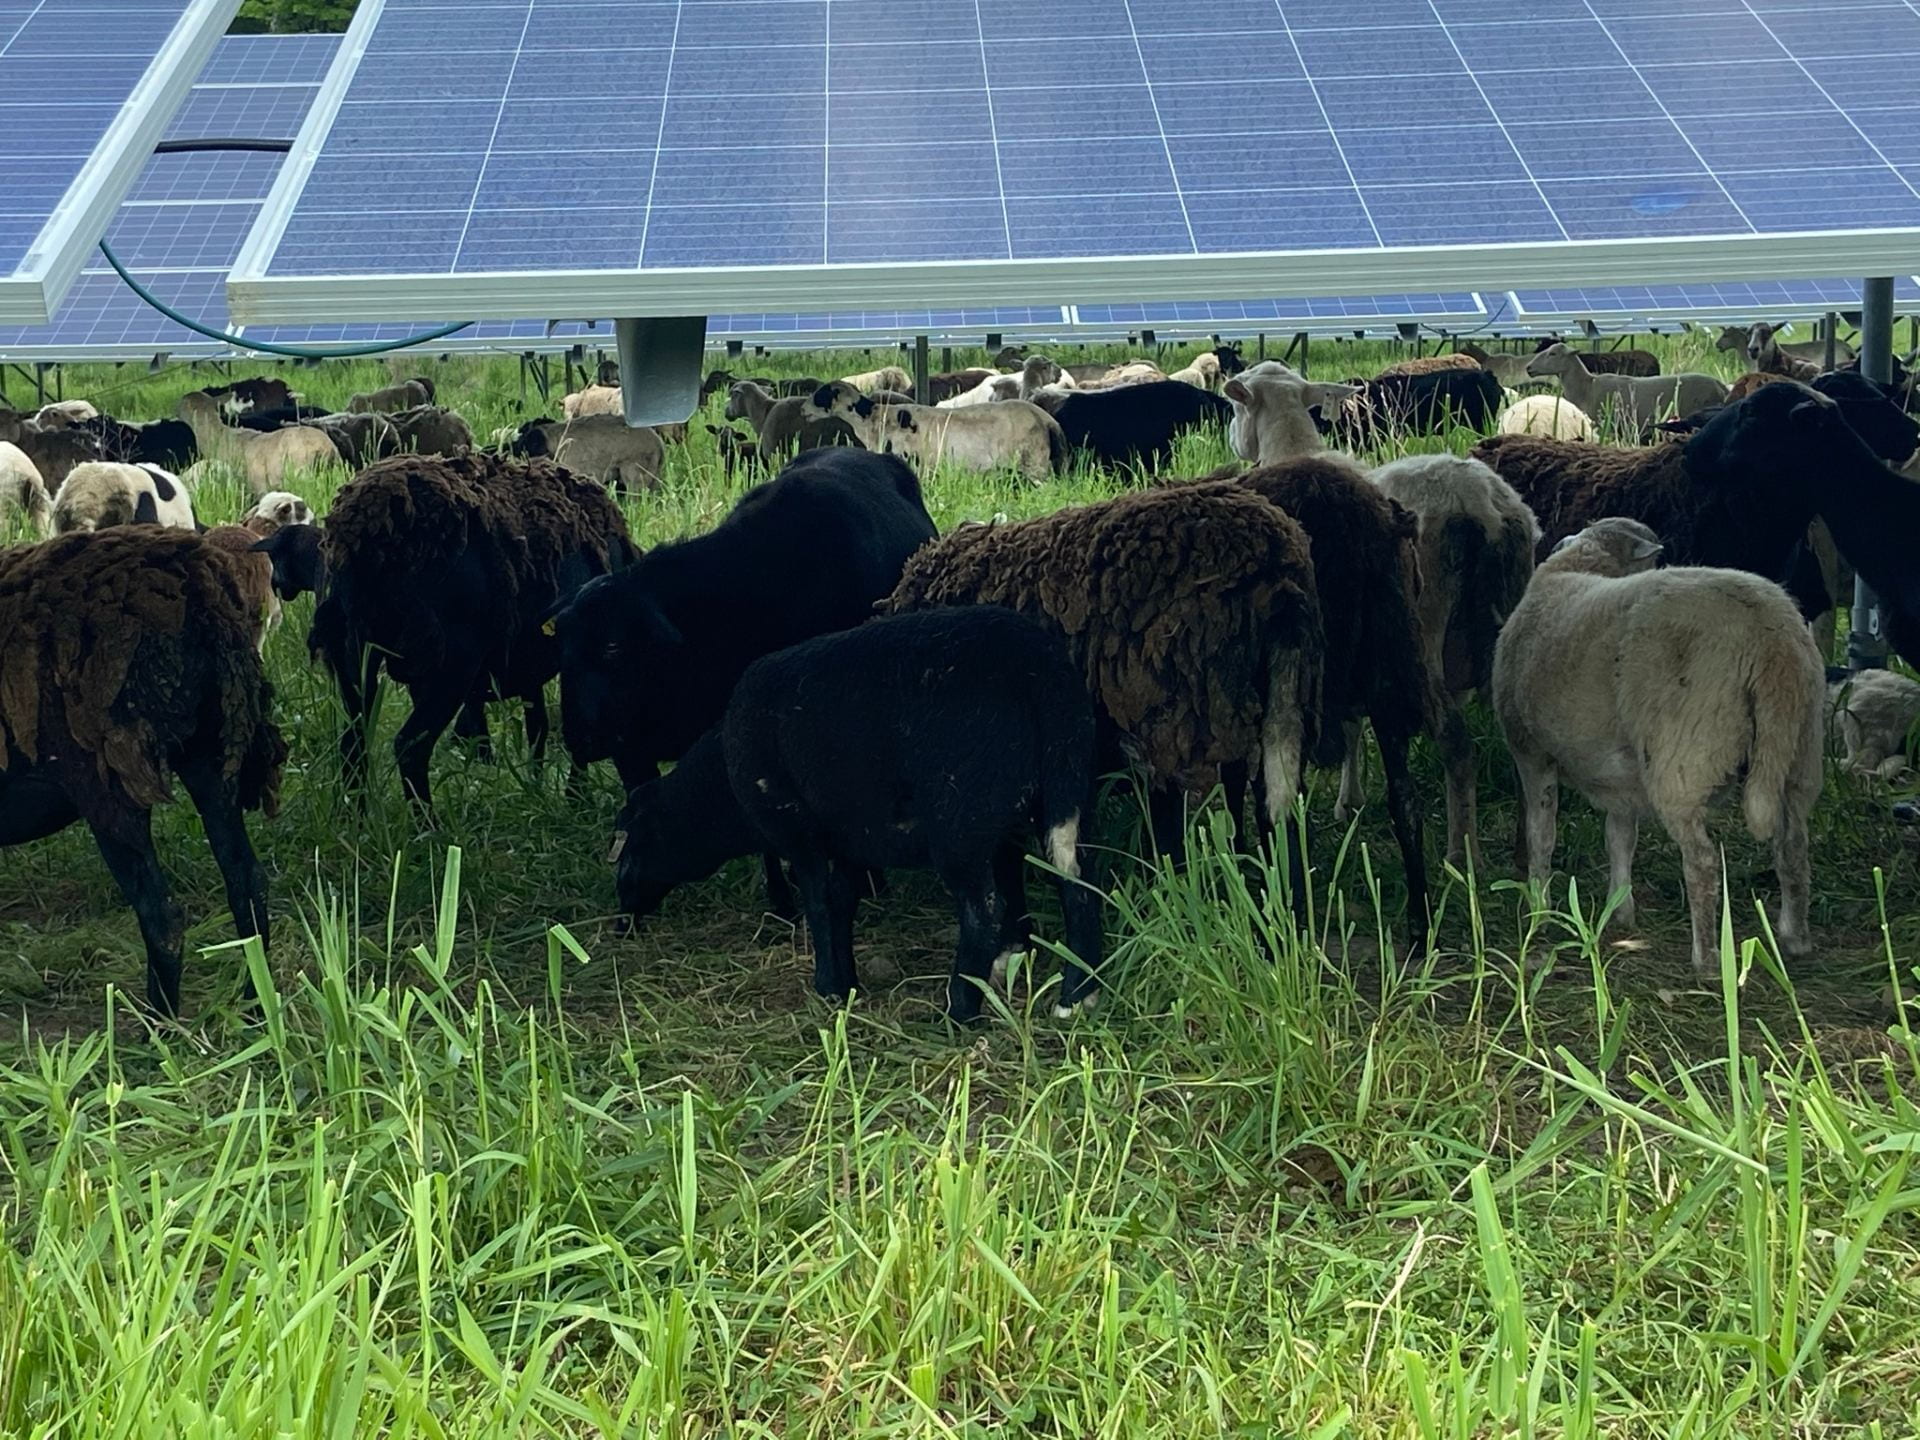 Sheep grazing under solar panels. Credit: Penn State MCOR